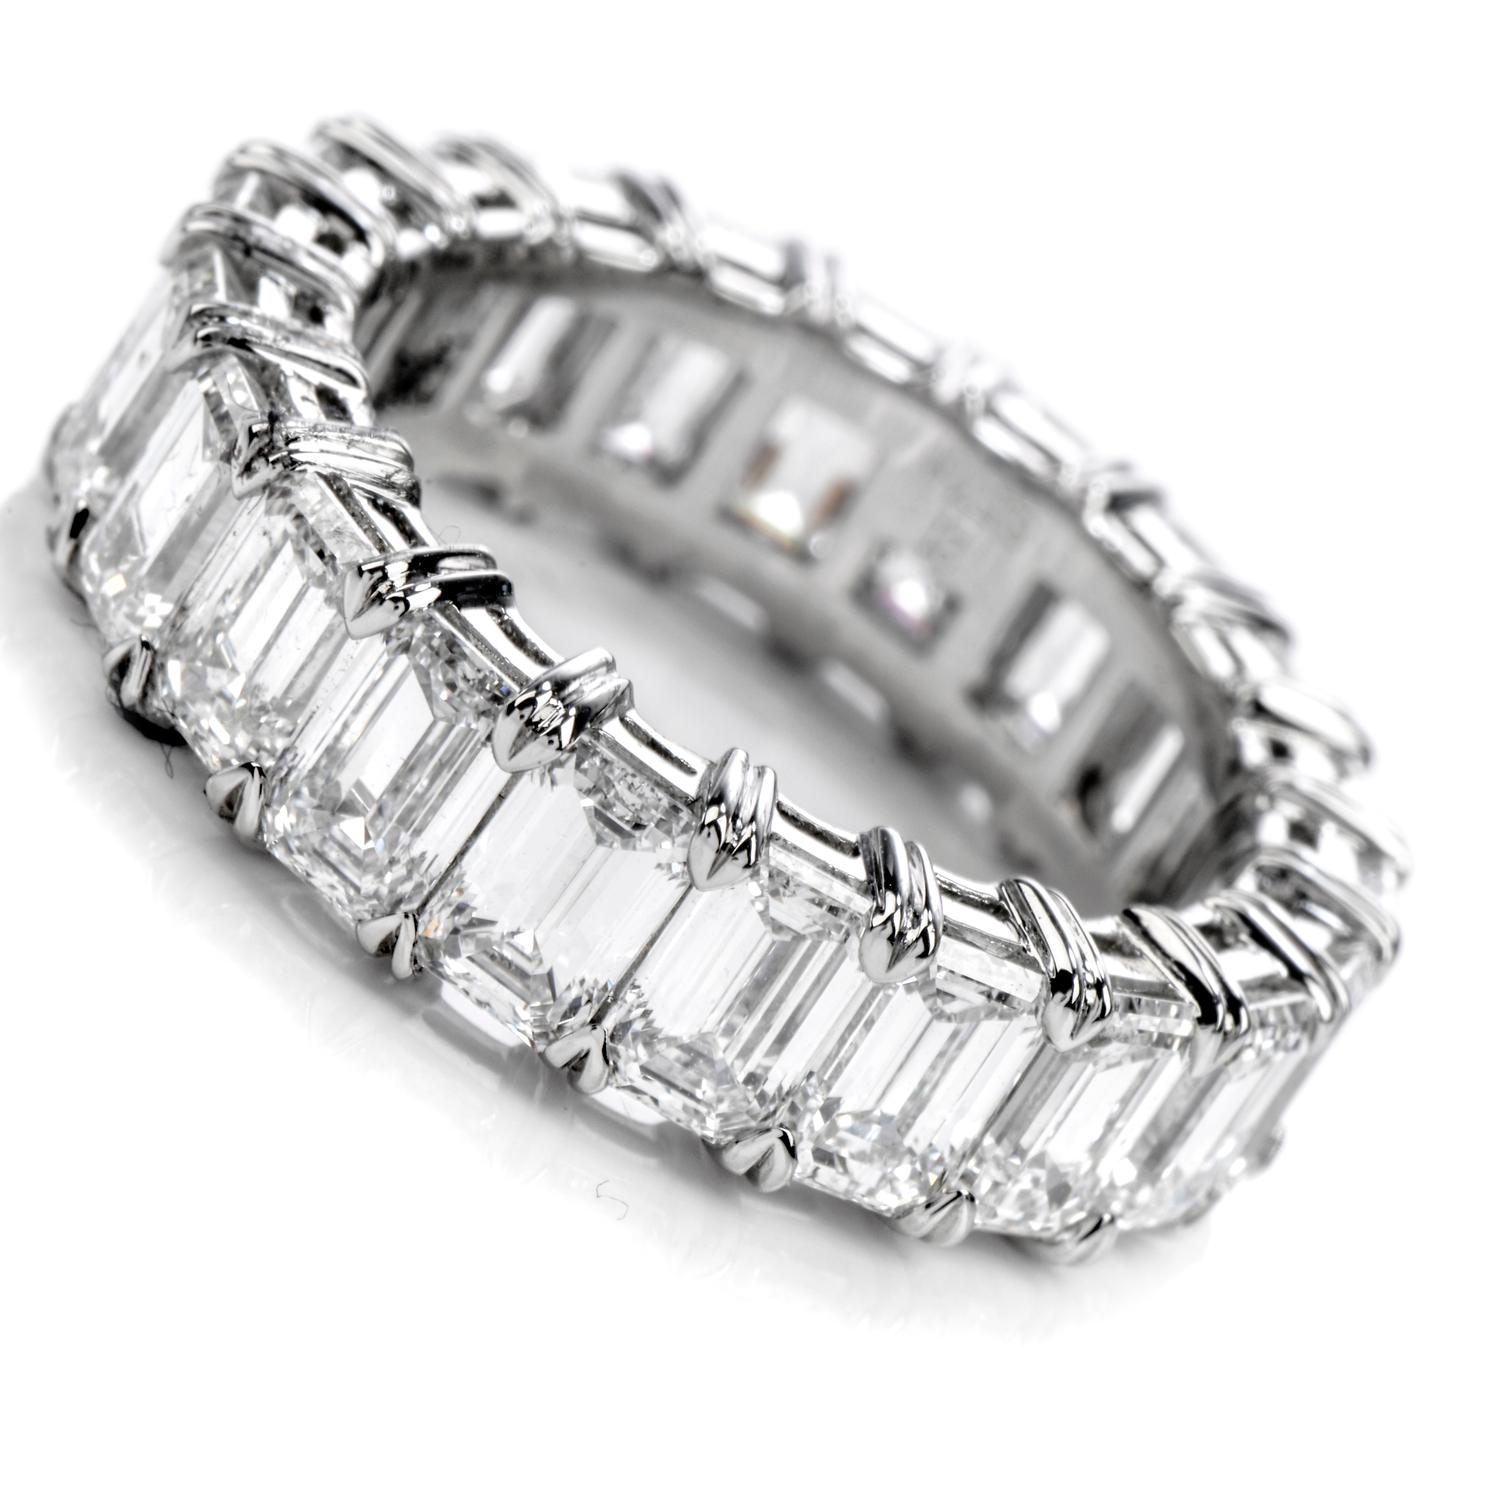 Artisan GIA 6.57 Carat D-VVS1 Emerald Cut Diamond Platinum Eternity Band Ring